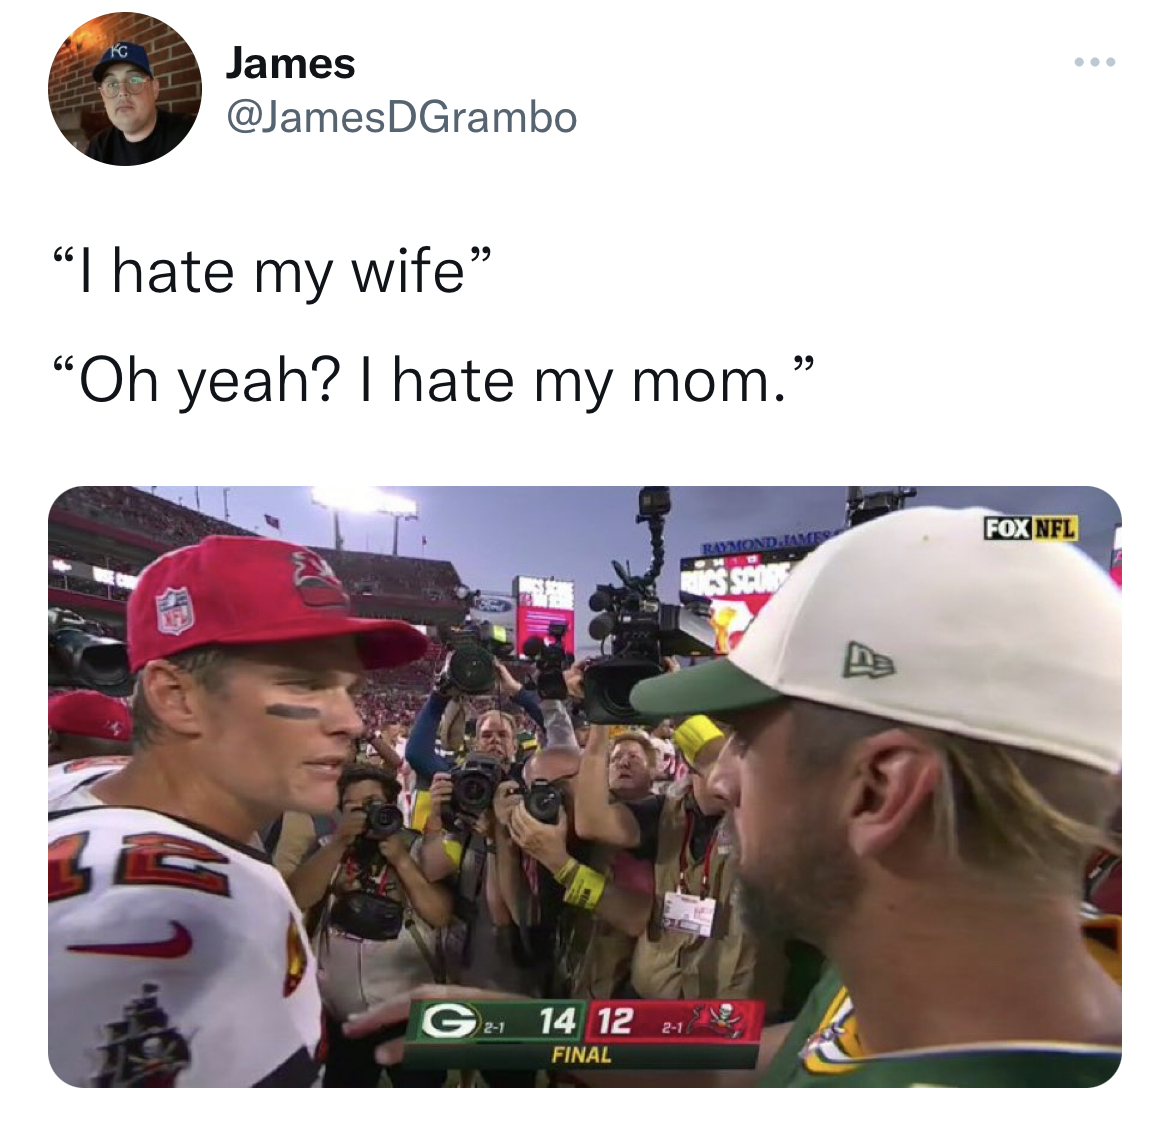 nfl football tweets week 3 - cap - Kc James "I hate my wife" "Oh yeah? I hate my mom." G 14 12 21 Final Raymond James Rics Score 21 Fox Nfl